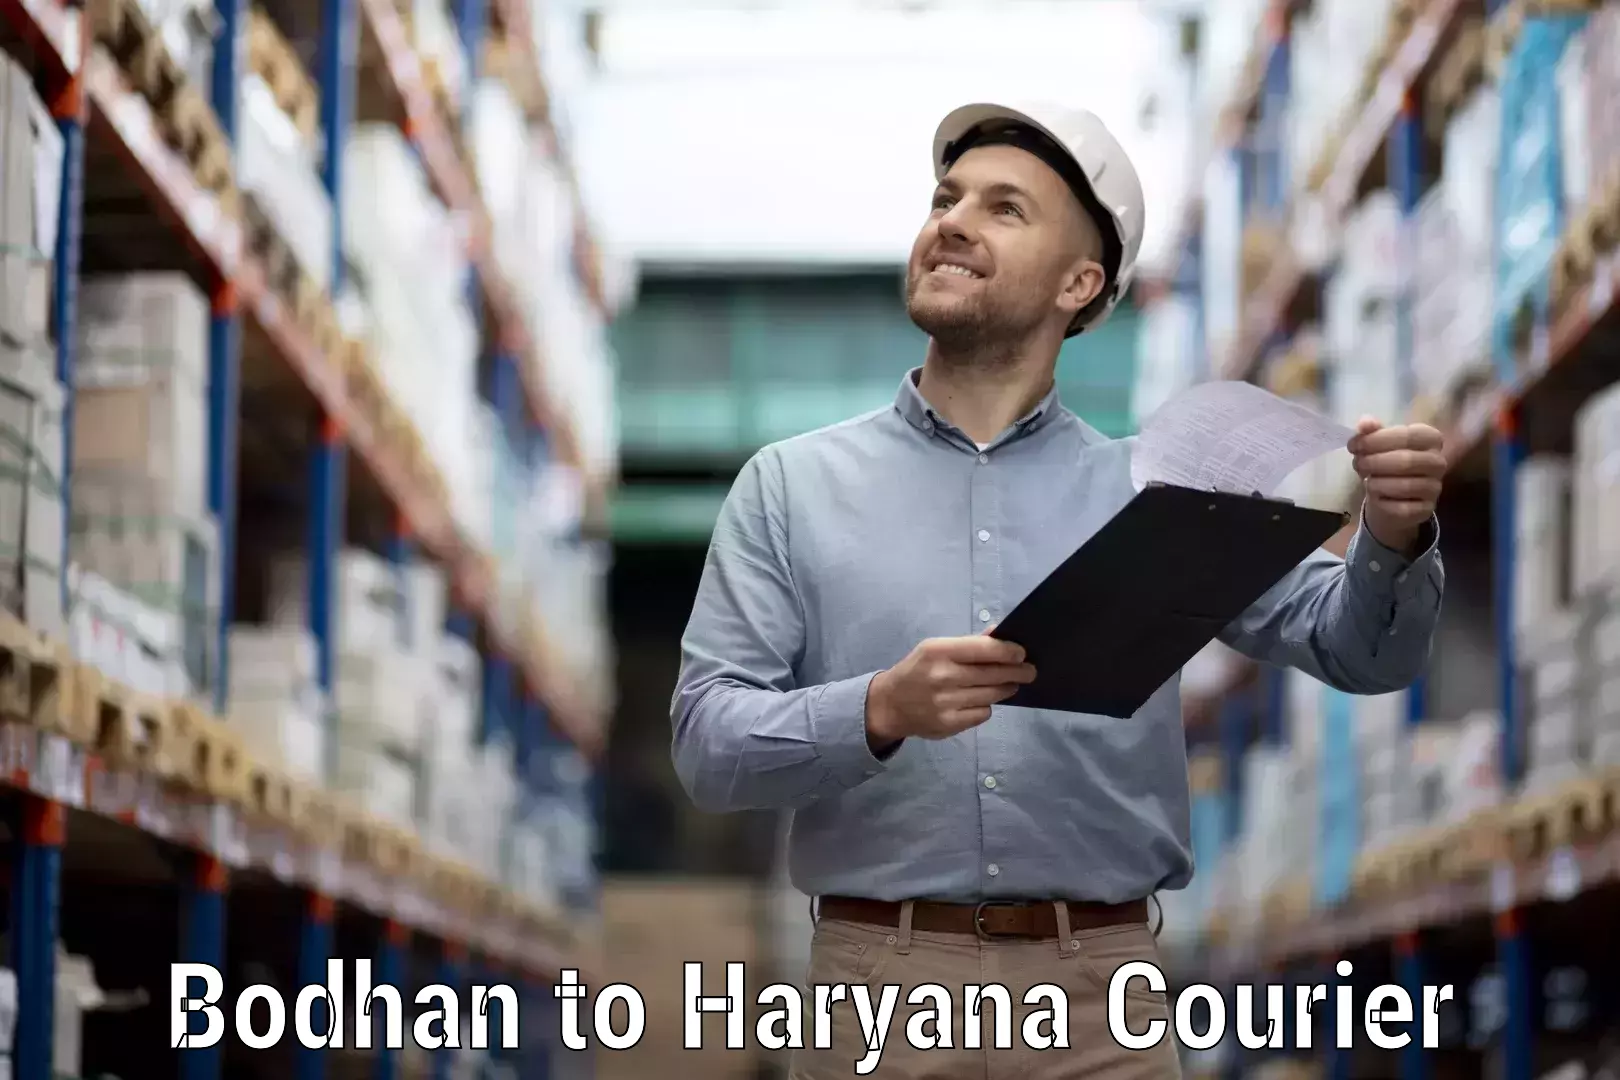 Courier service comparison Bodhan to Gohana